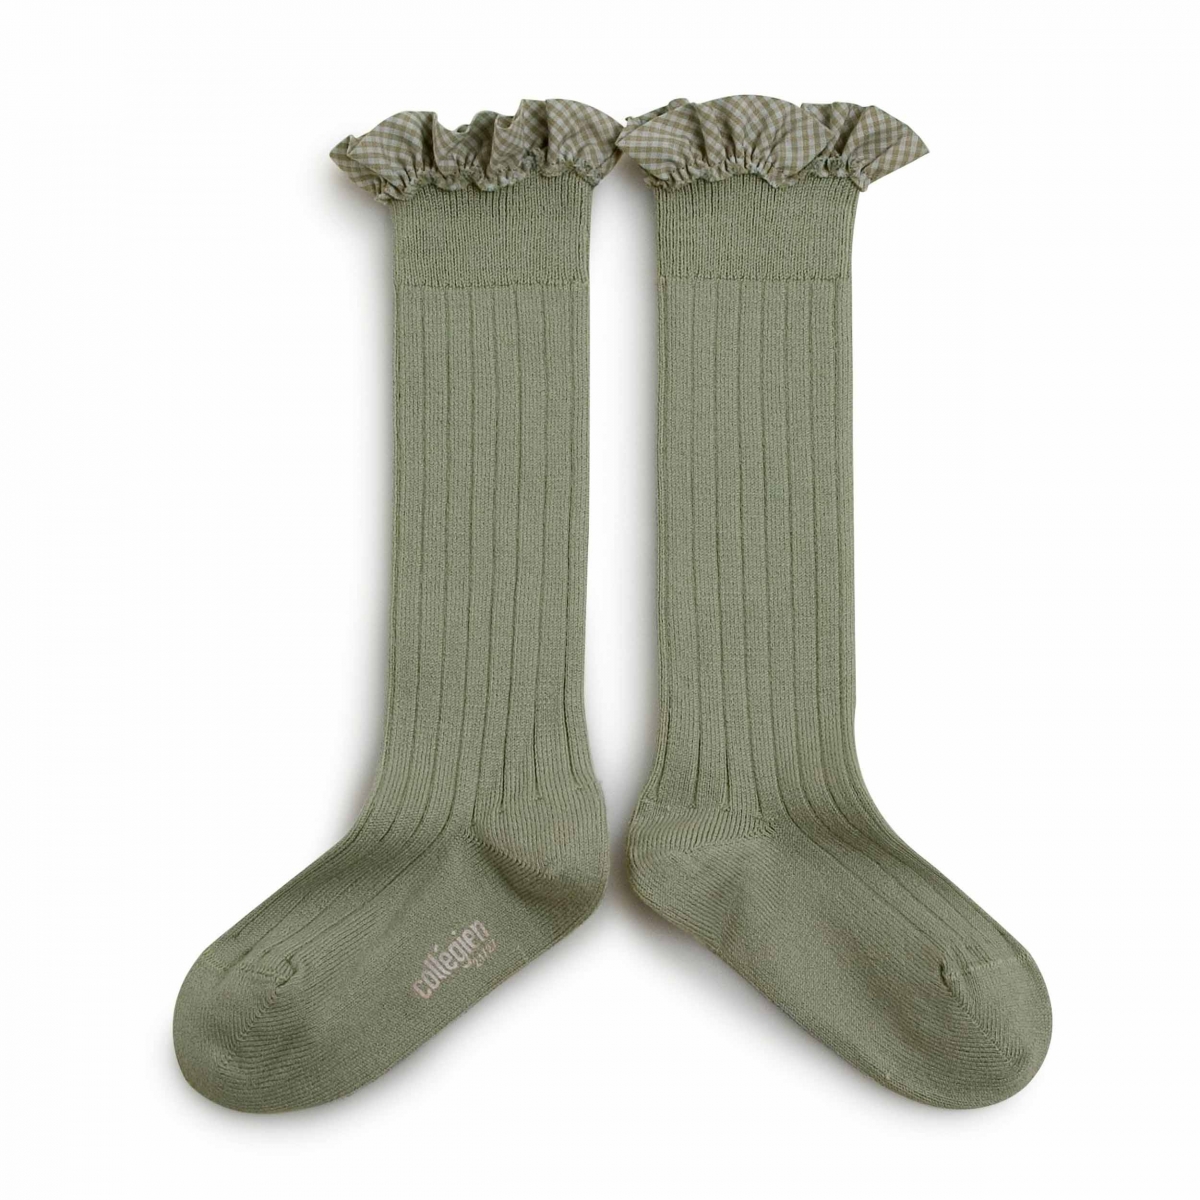 Collégien - Knee high socks Apolline sauge - Medias y calcetines - 2961 188 Apolline 